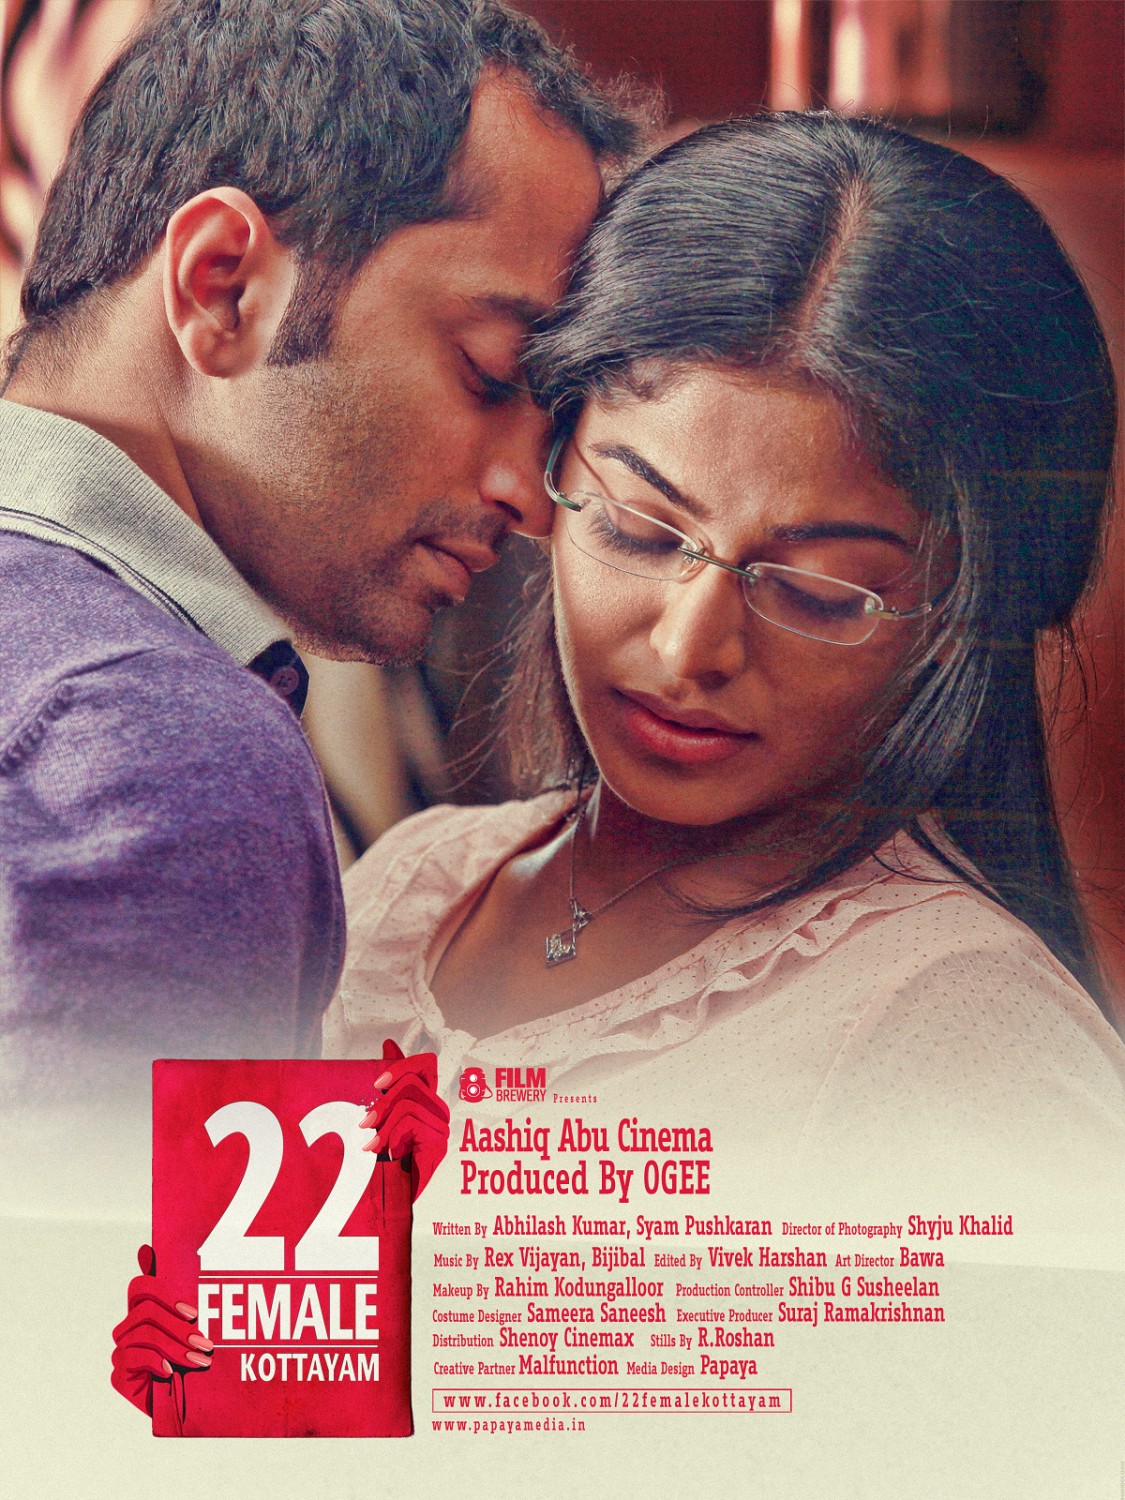 Extra Large Movie Poster Image for 22 Female Kottayam (#8 of 28)